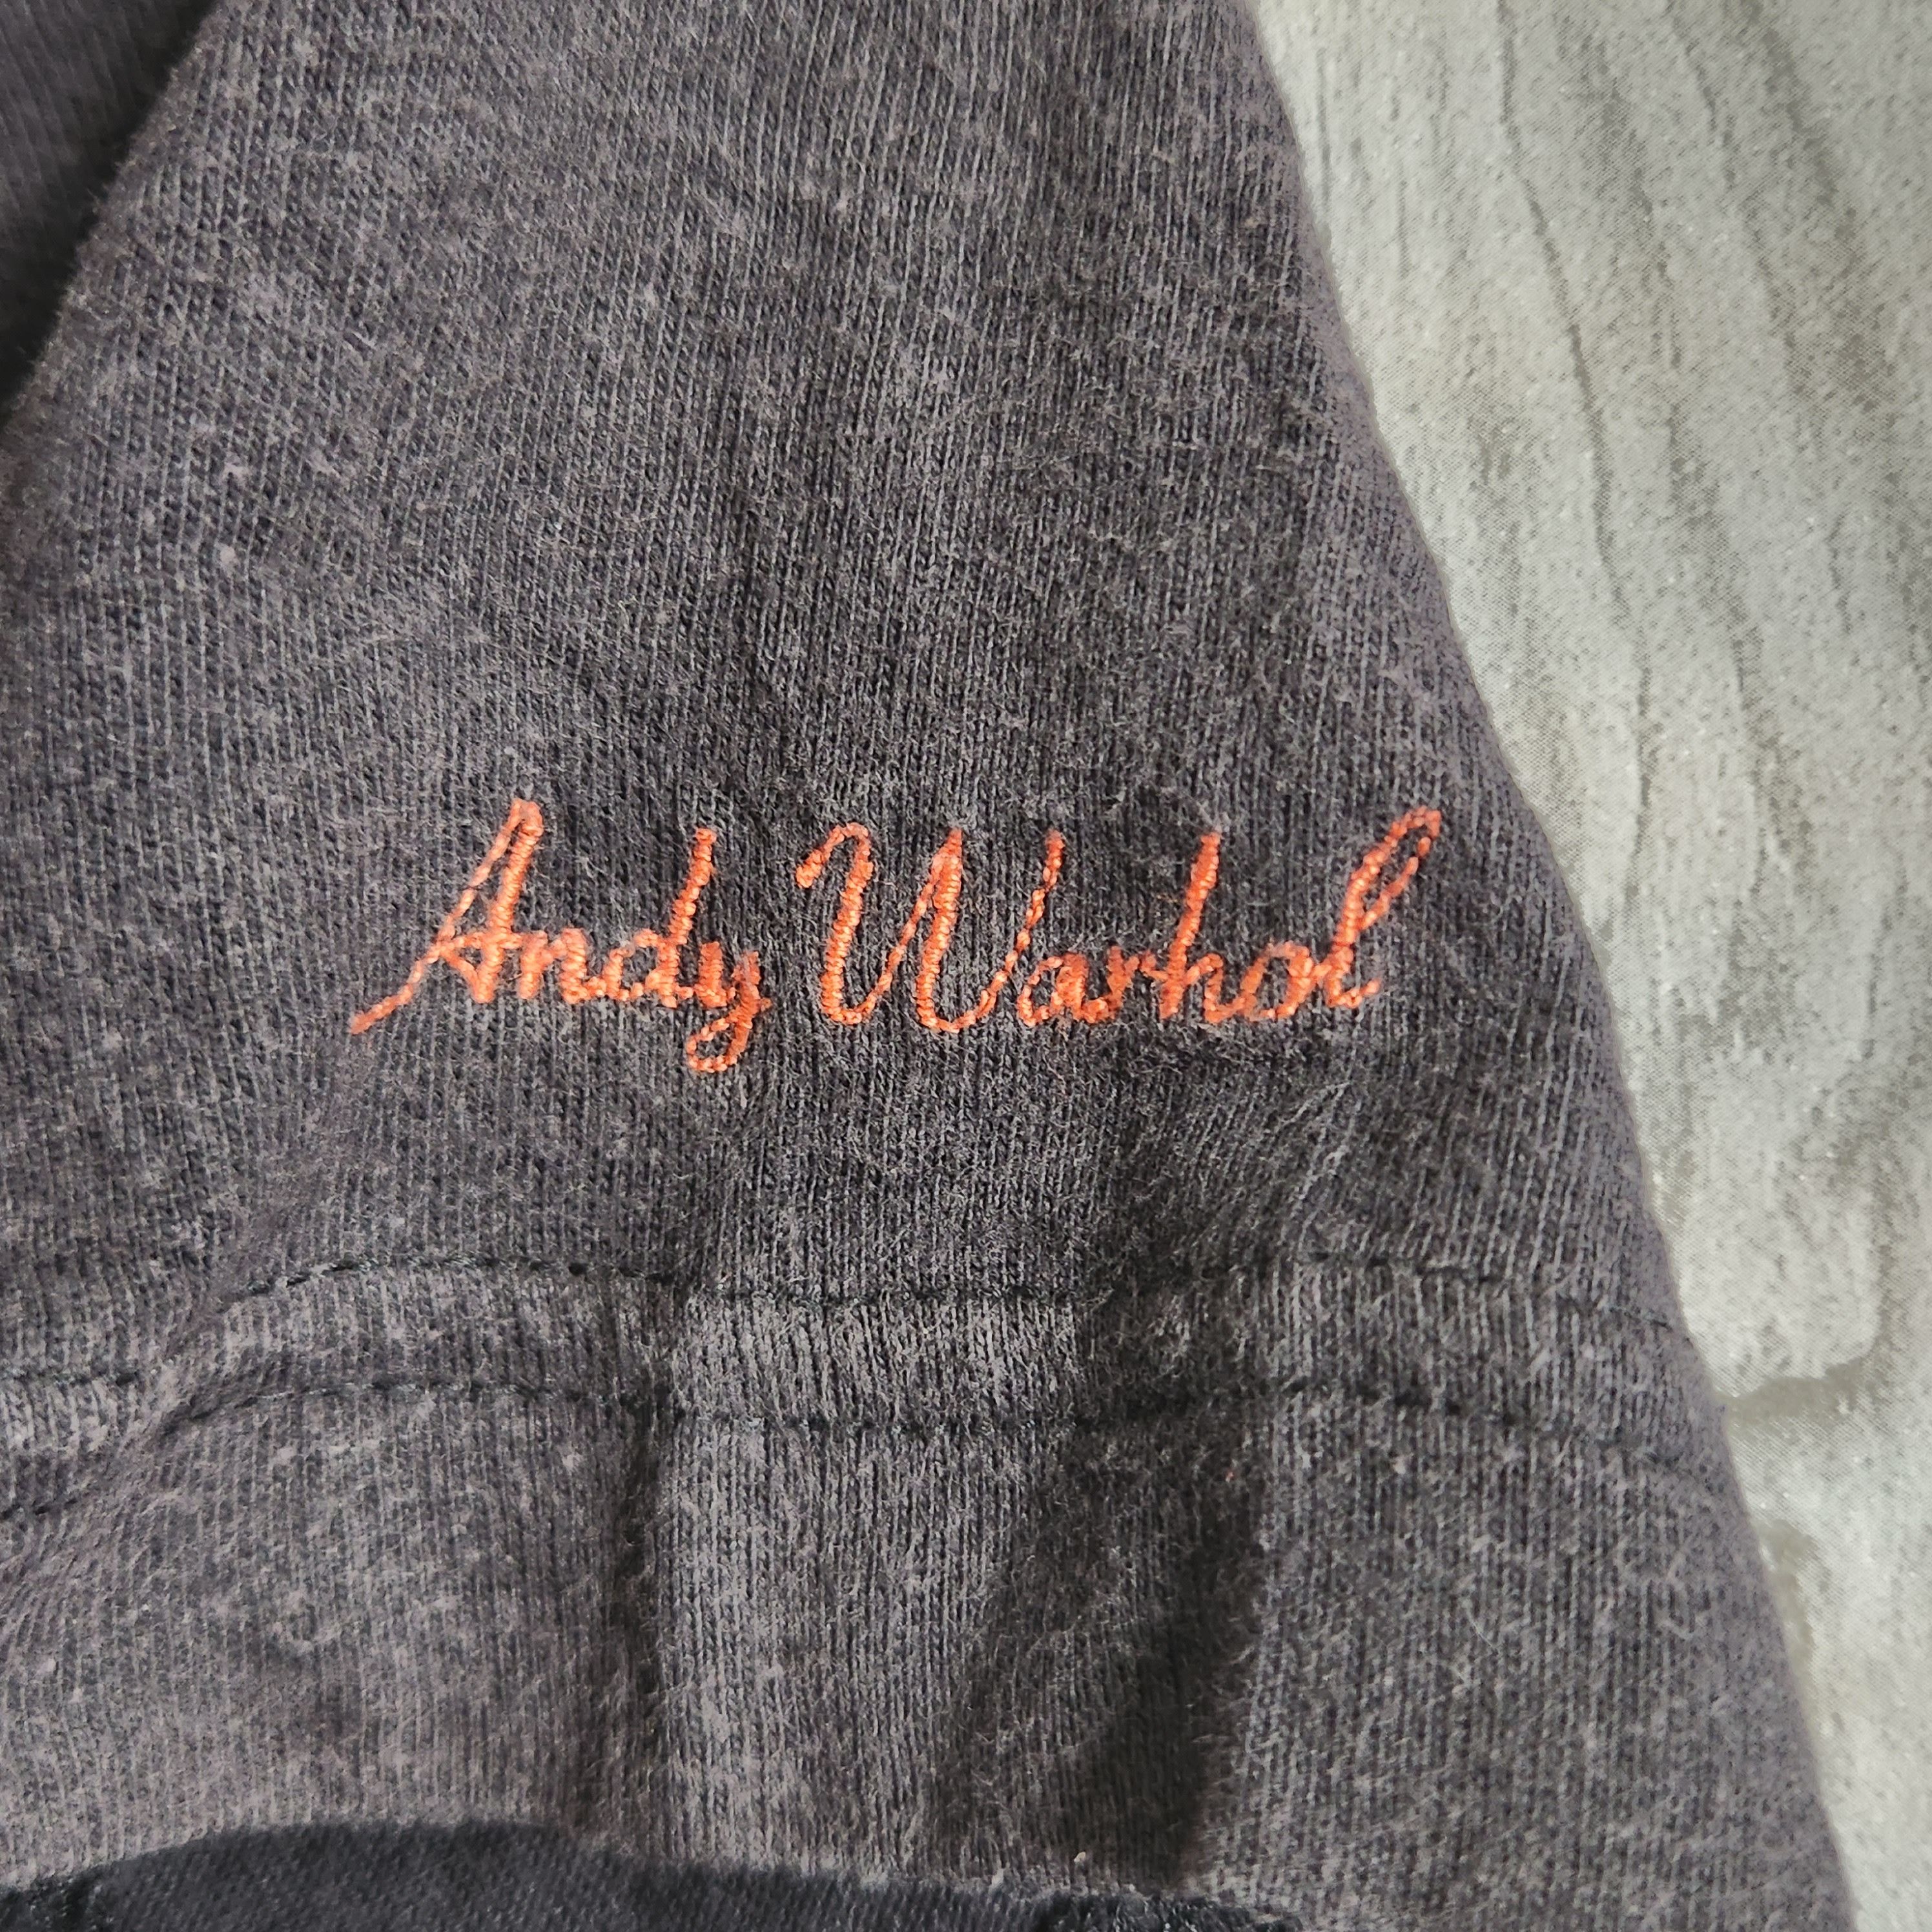 Andy Warhol X Uniqlo Campbells TShirt Japan - 13